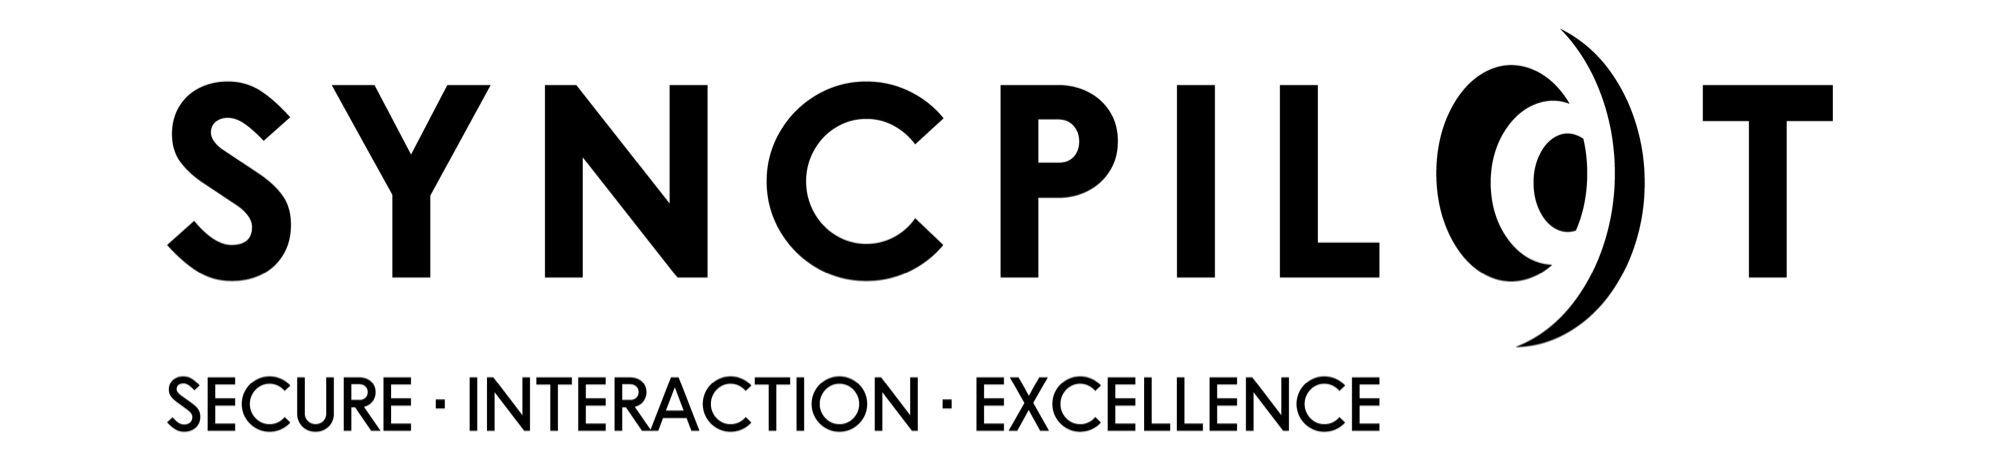 SYNCPILOT-Logo-2020-blackclaim-.png